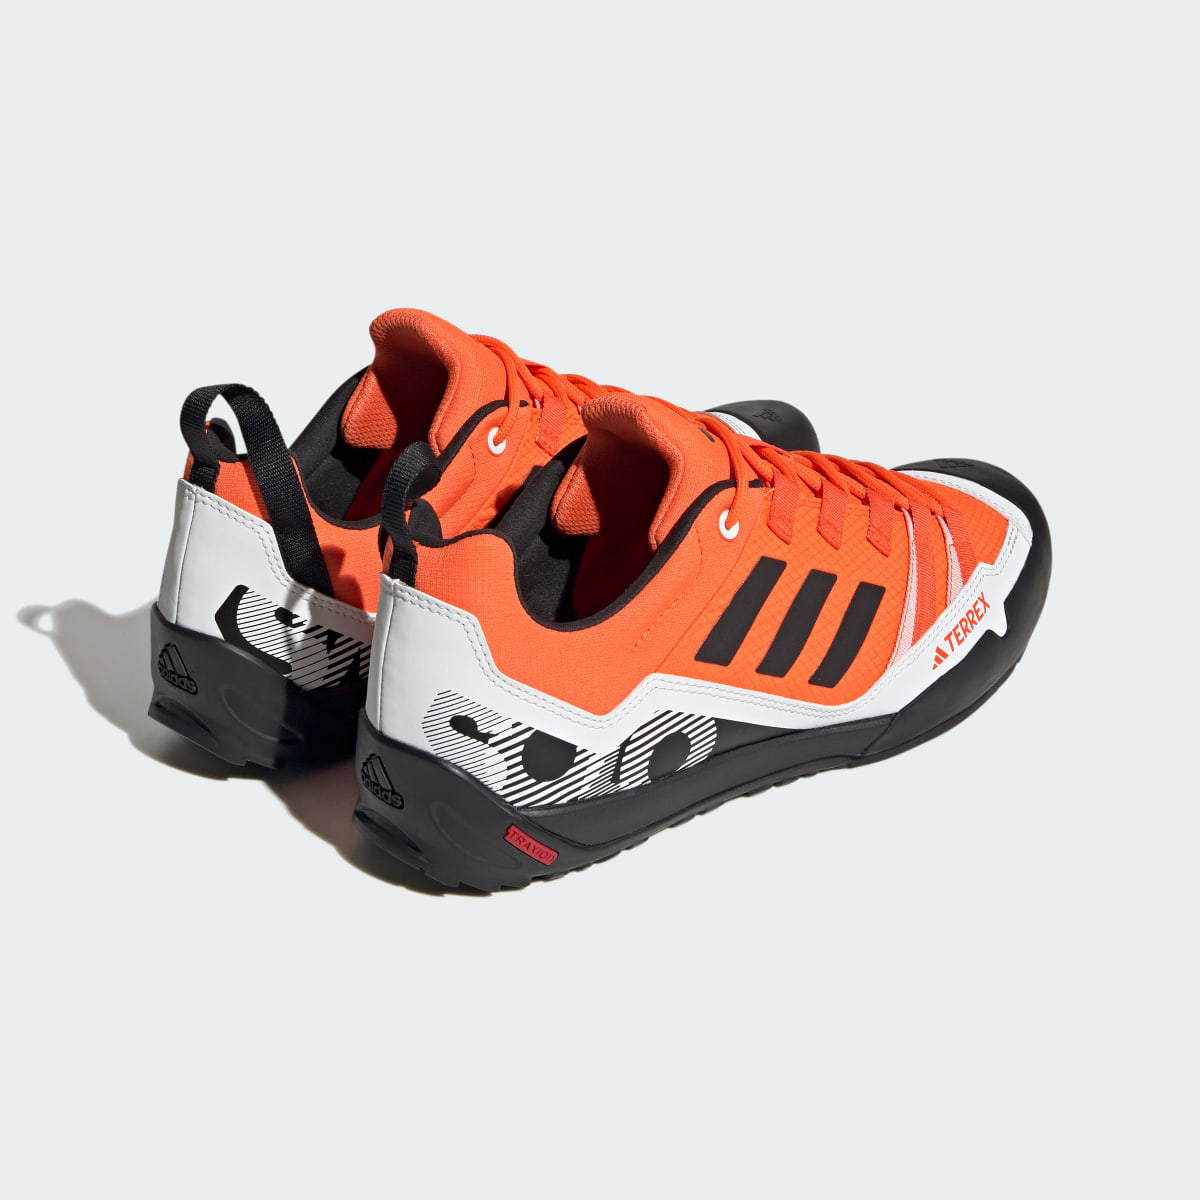 Adidas Chaussure de randonnée Terrex Swift Solo 2.0. 6